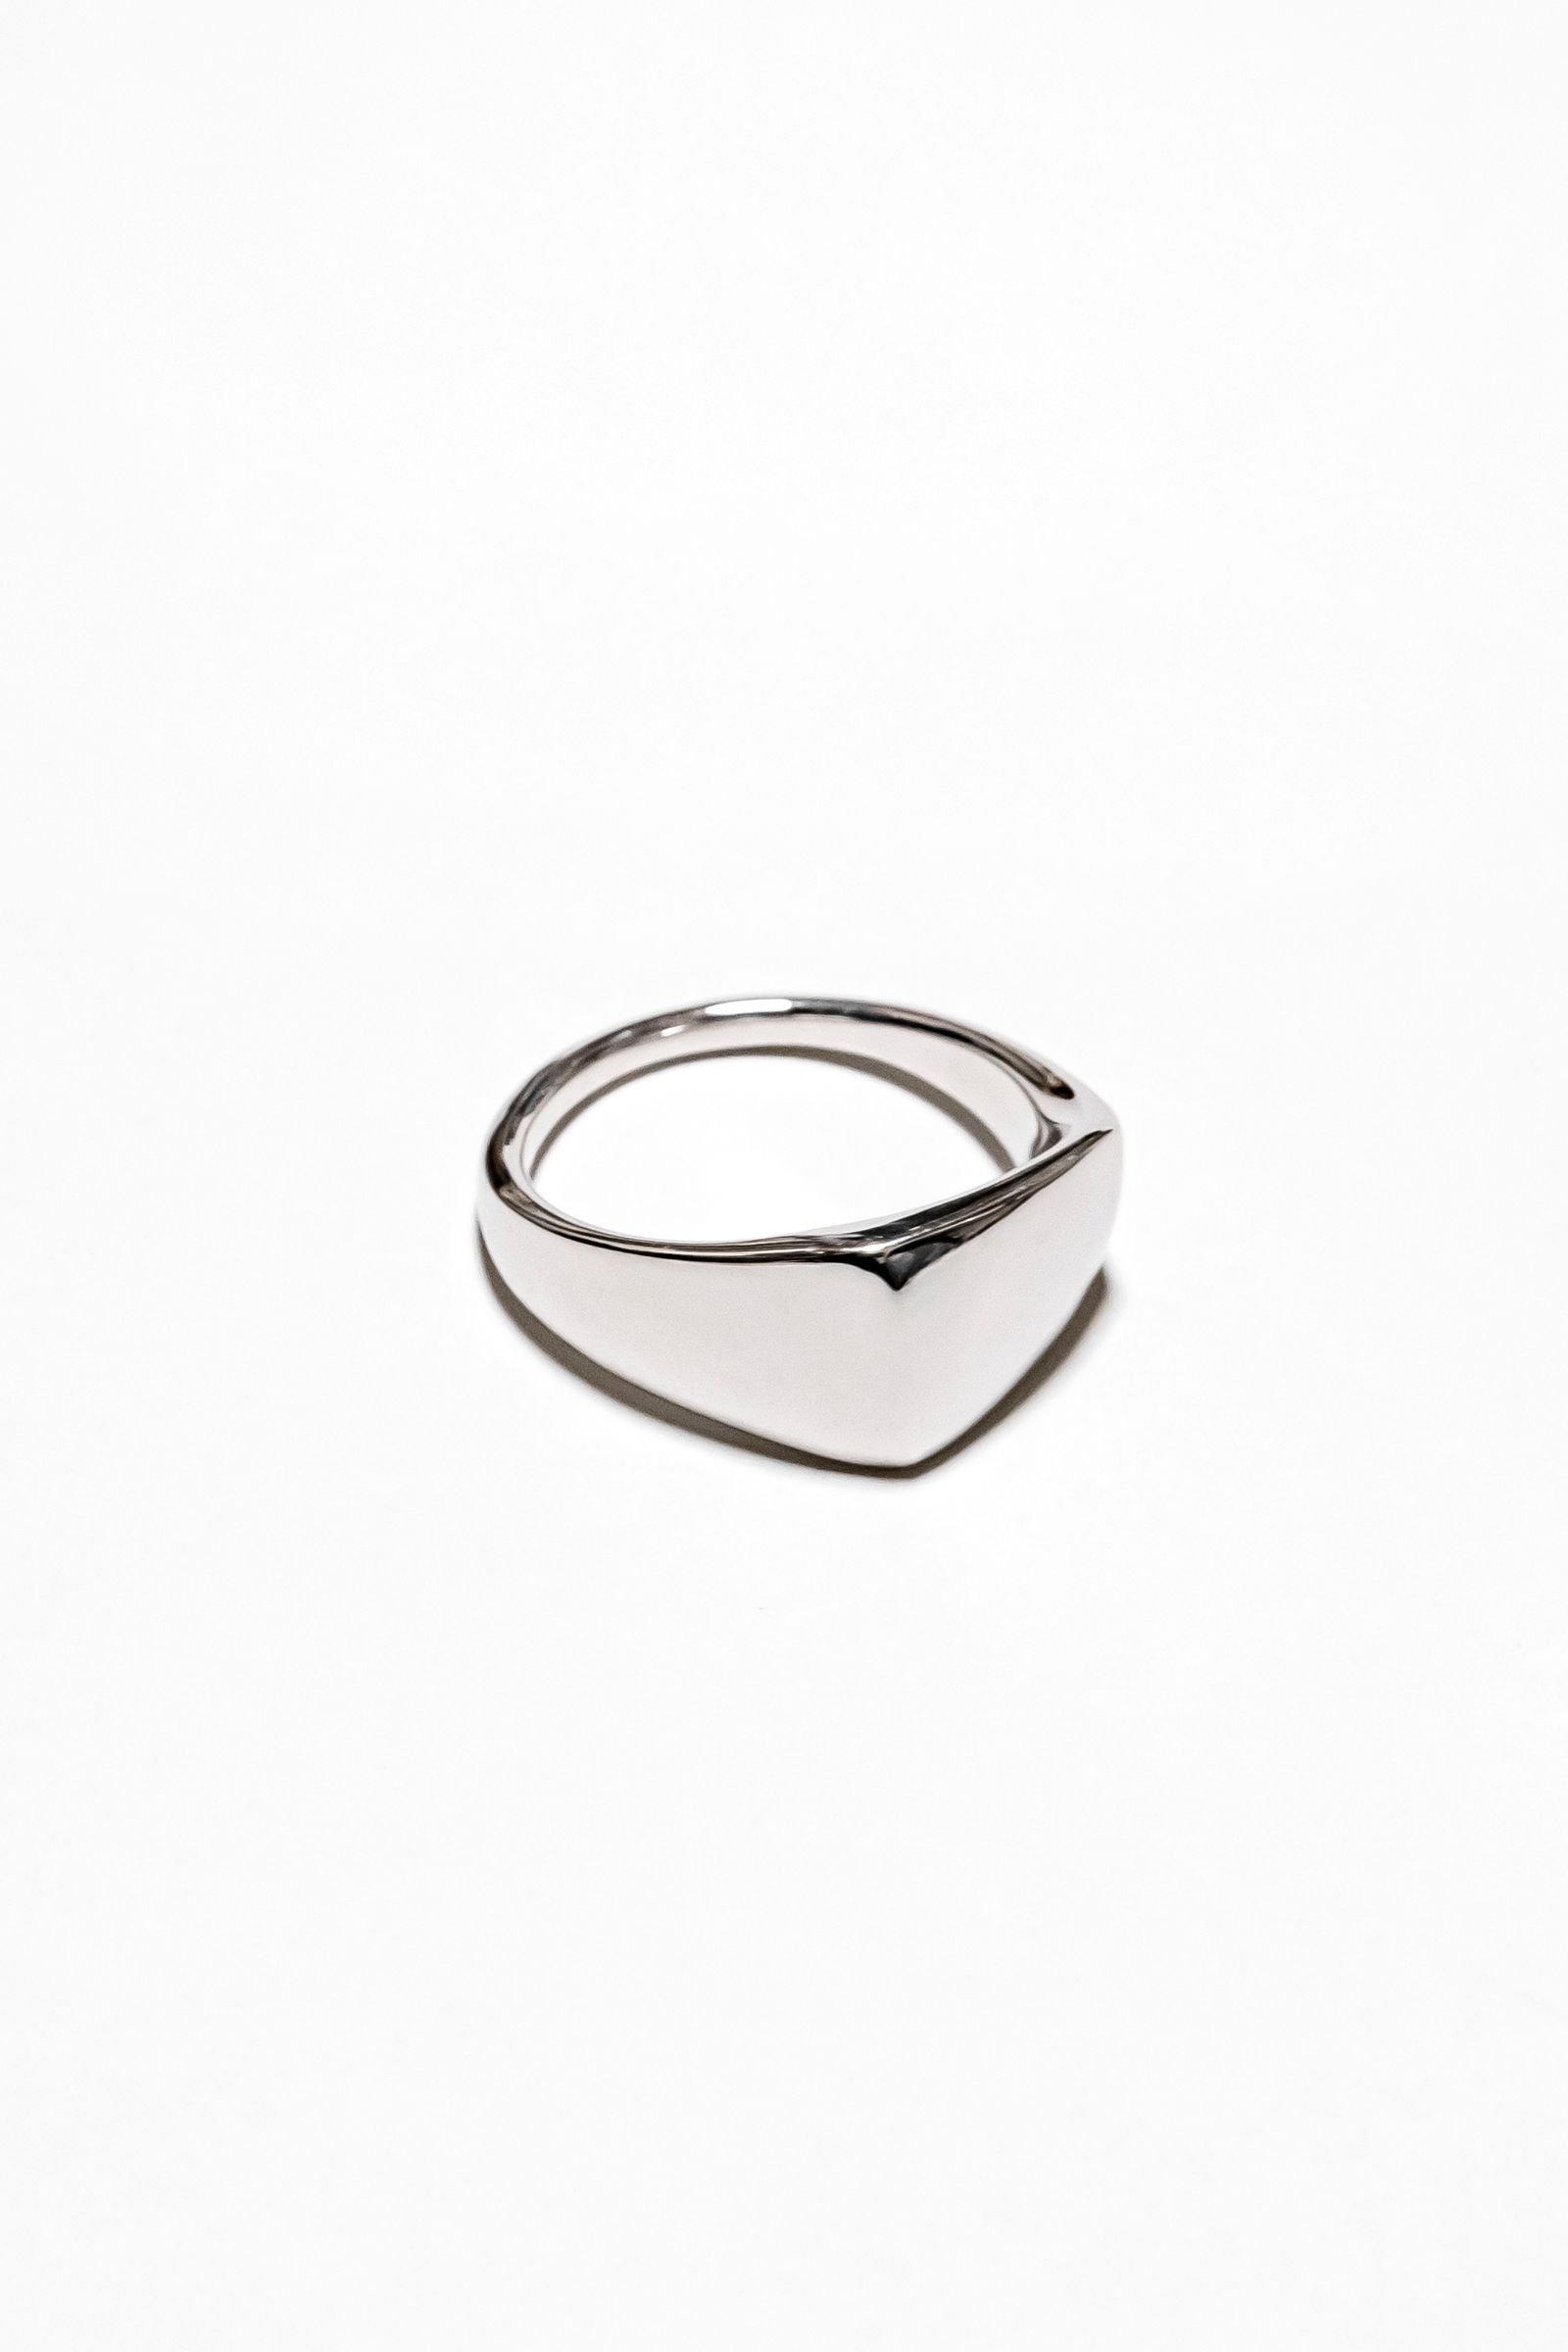 MIRAH - 【オーダー可能】R103 silver925 ring RP | Retikle Online Store